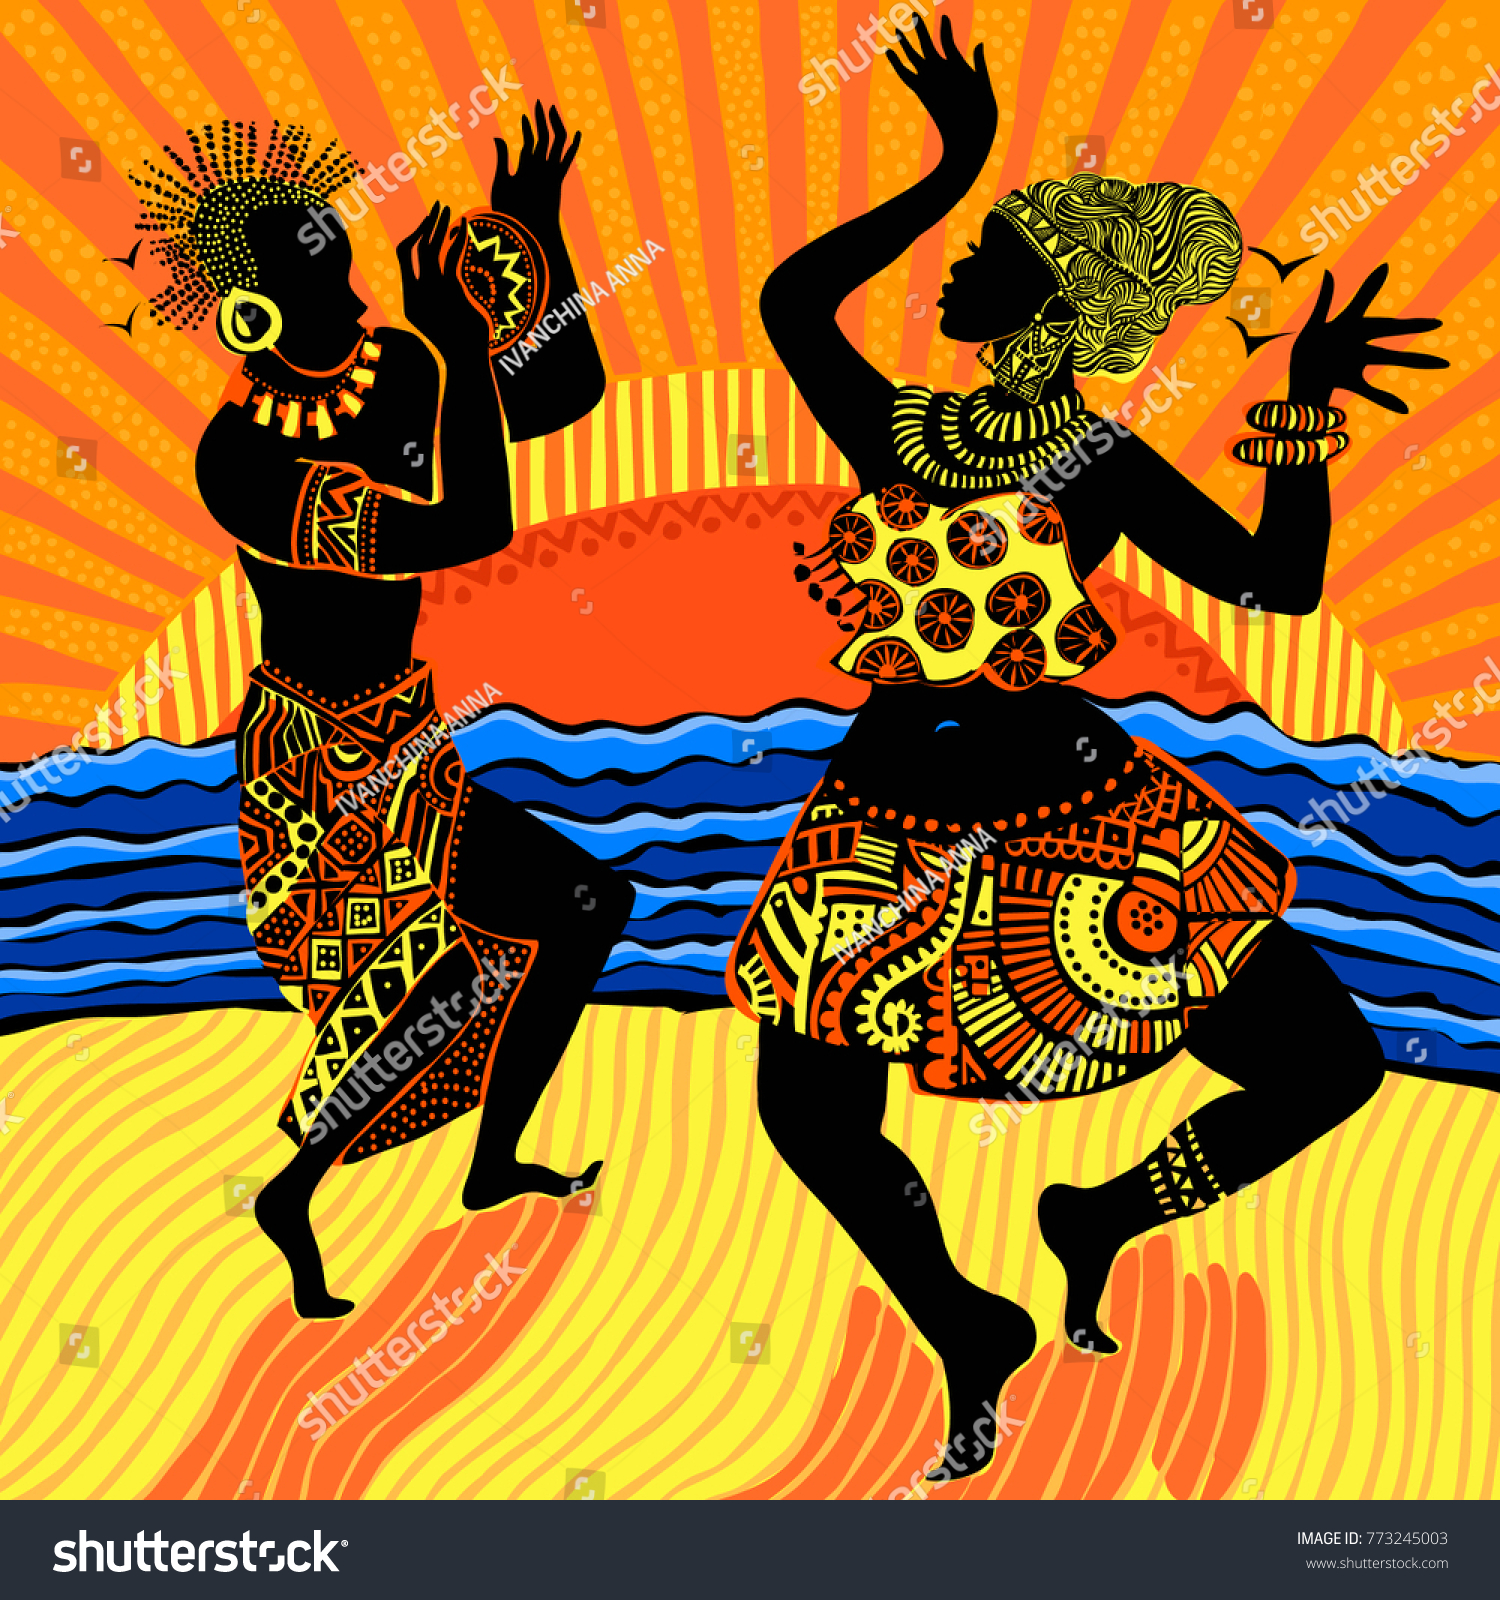 Танец африканцев схематично